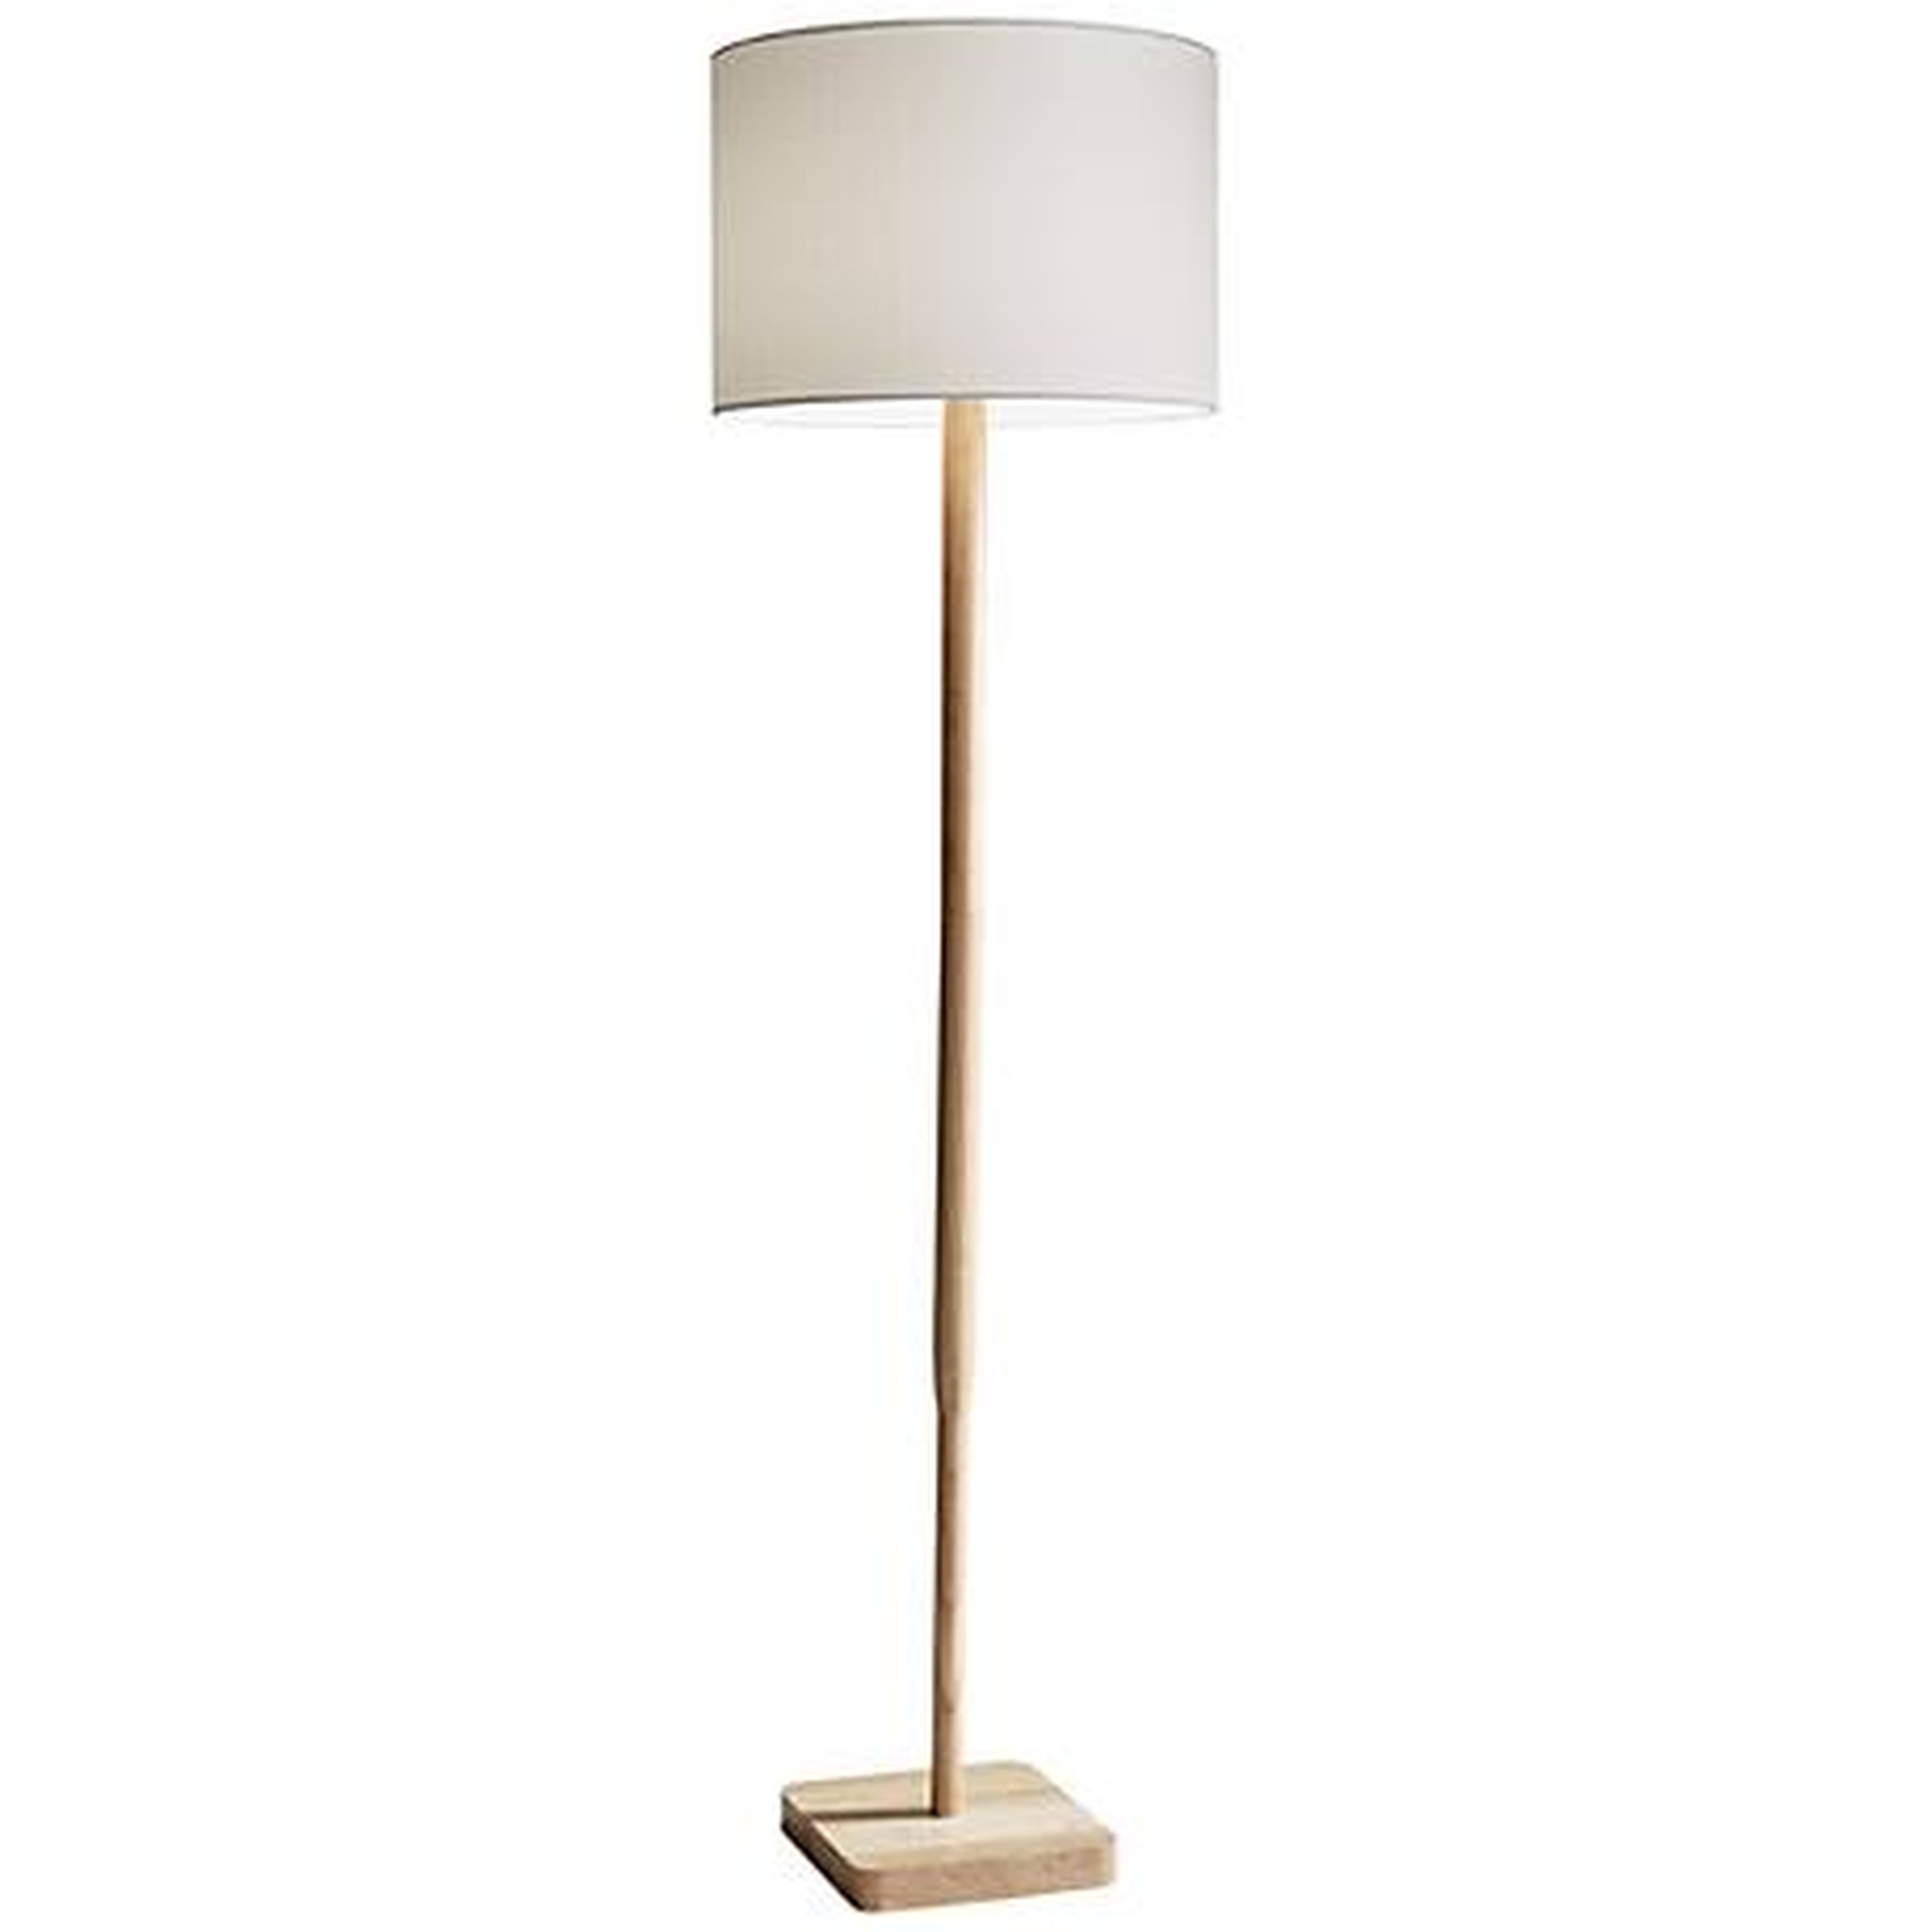 Ellis Natural Rubberwood Floor Lamp white - Lamps Plus